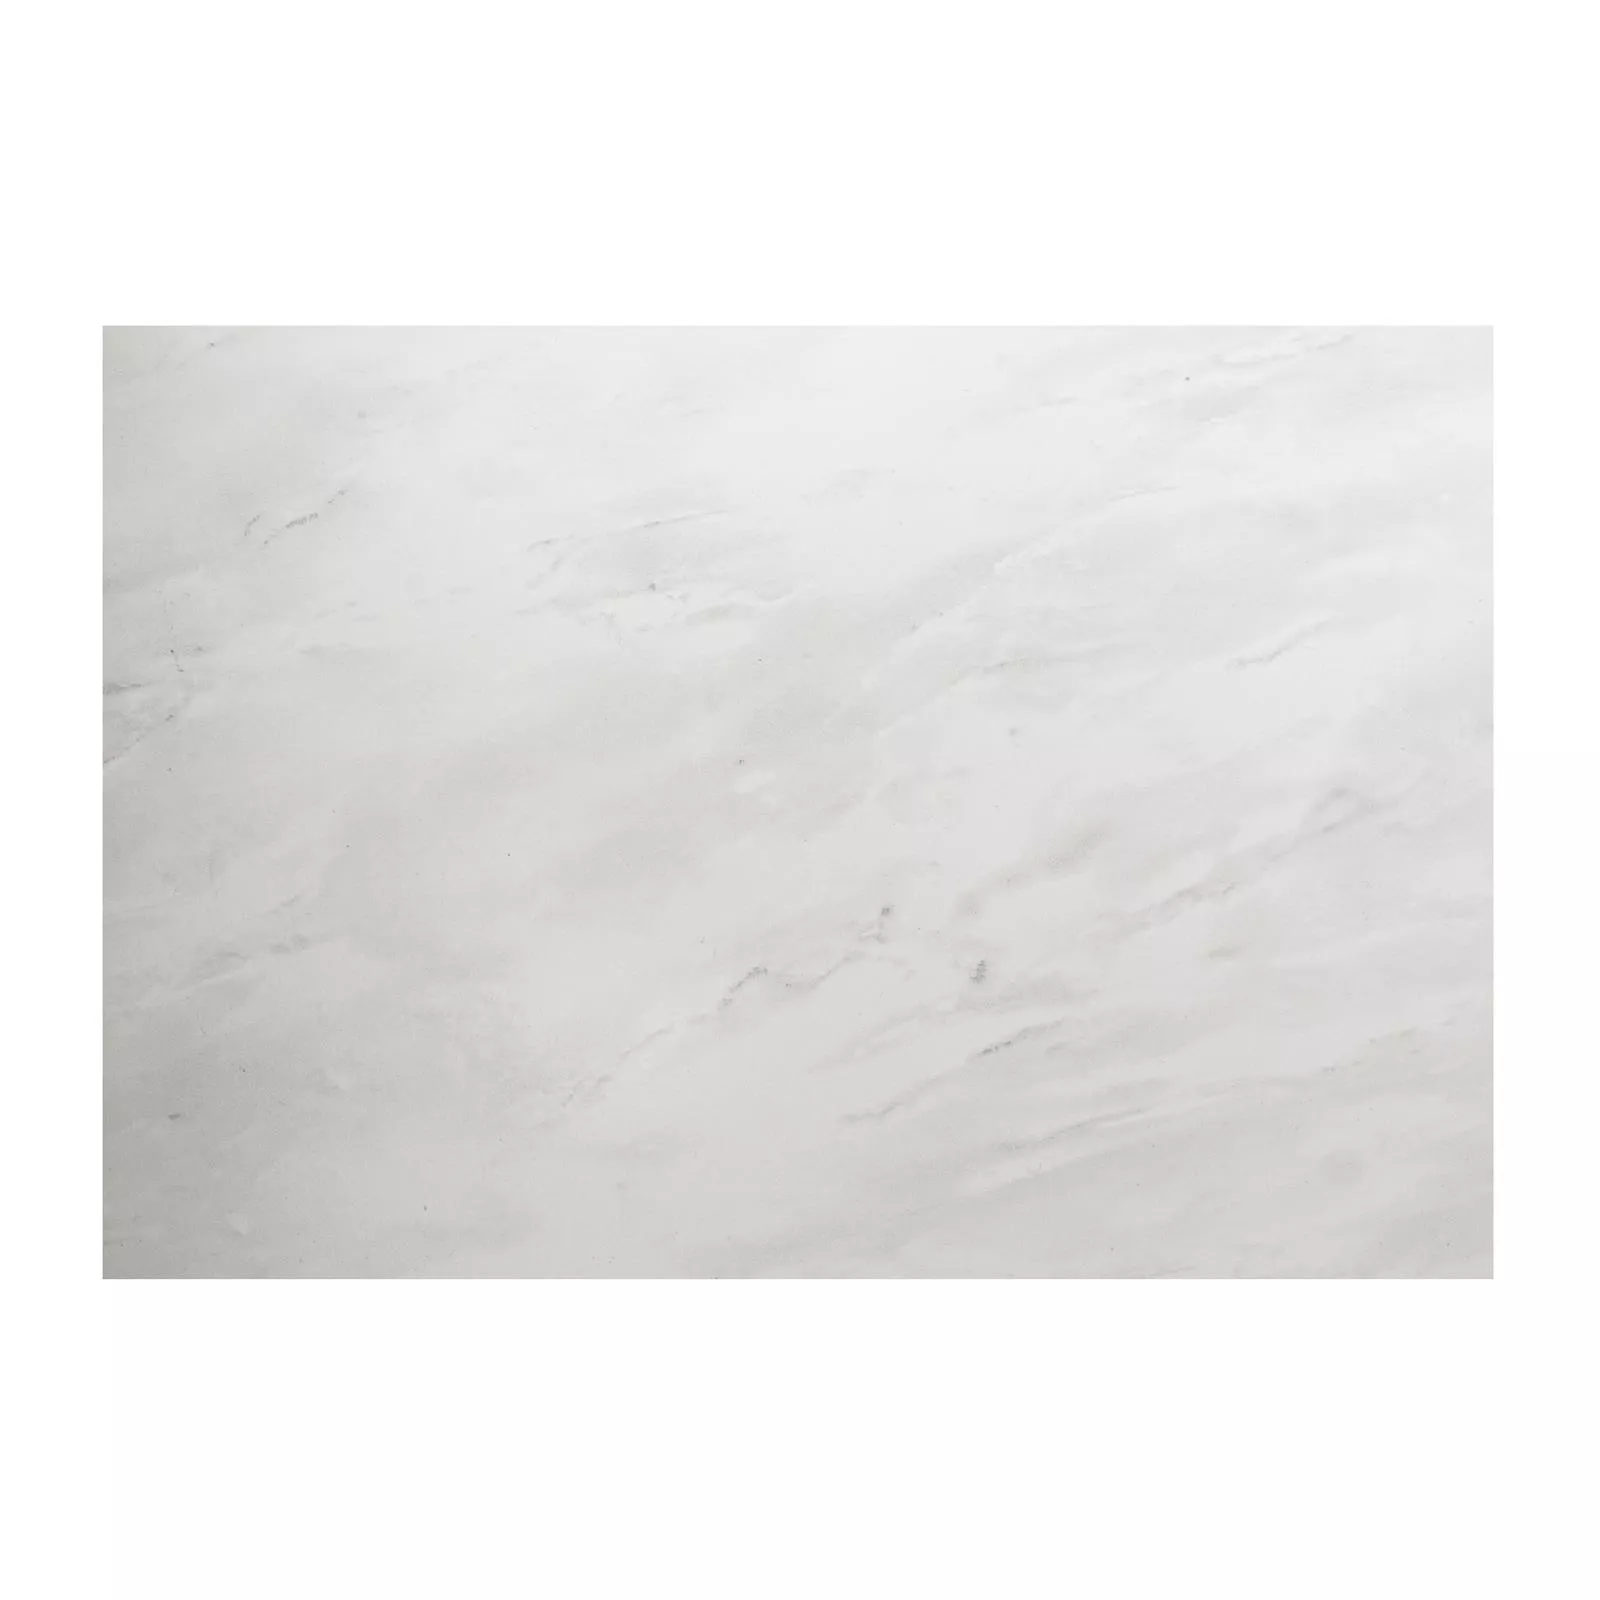 Sample Wall Tile Aspach Marbled Grey 20x25cm Glossy